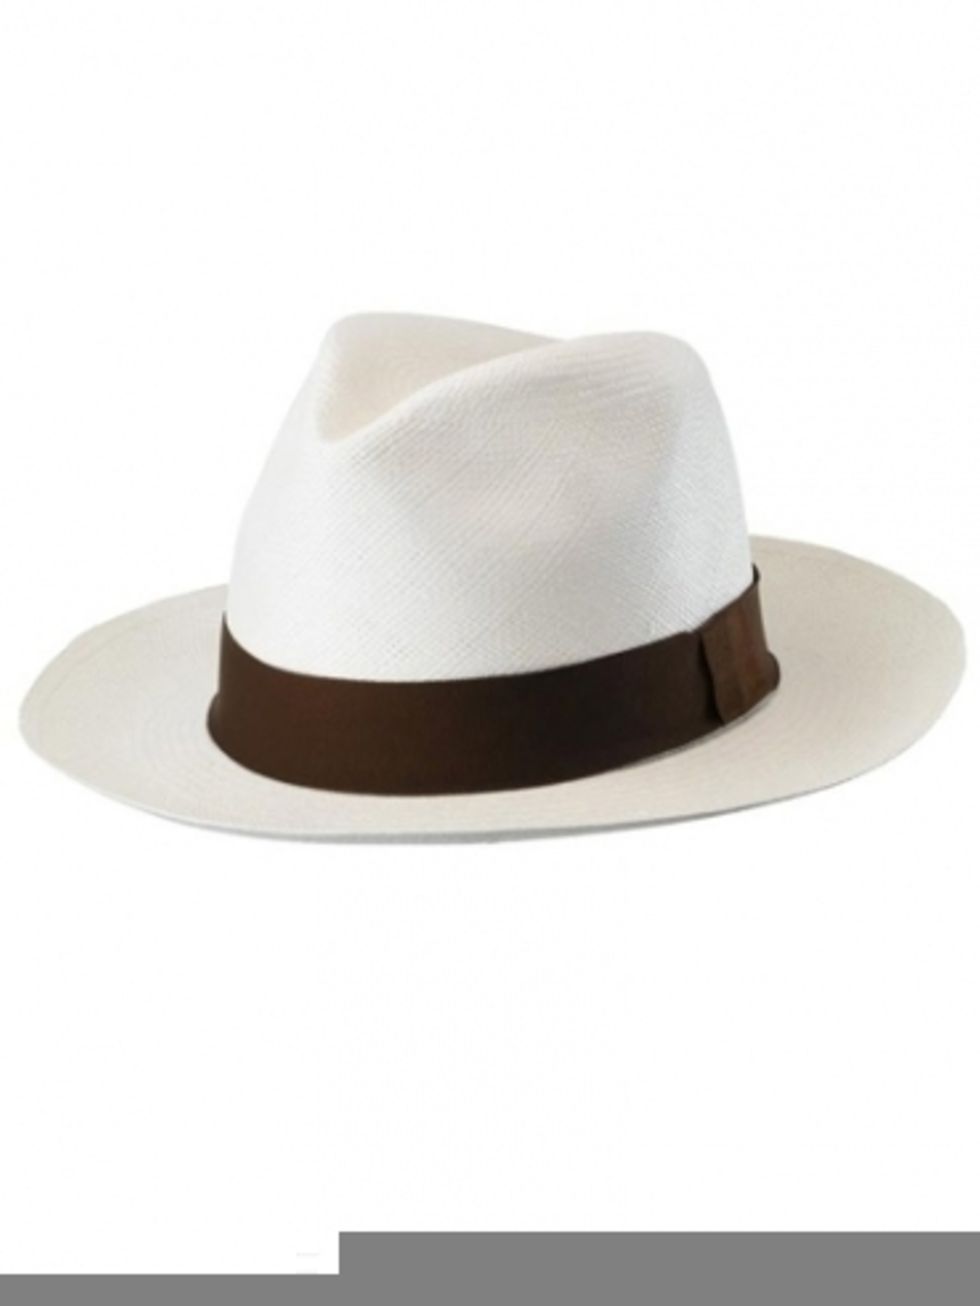 Hat, Line, Headgear, Costume accessory, Costume hat, Grey, Beige, Material property, Fedora, Sun hat, 